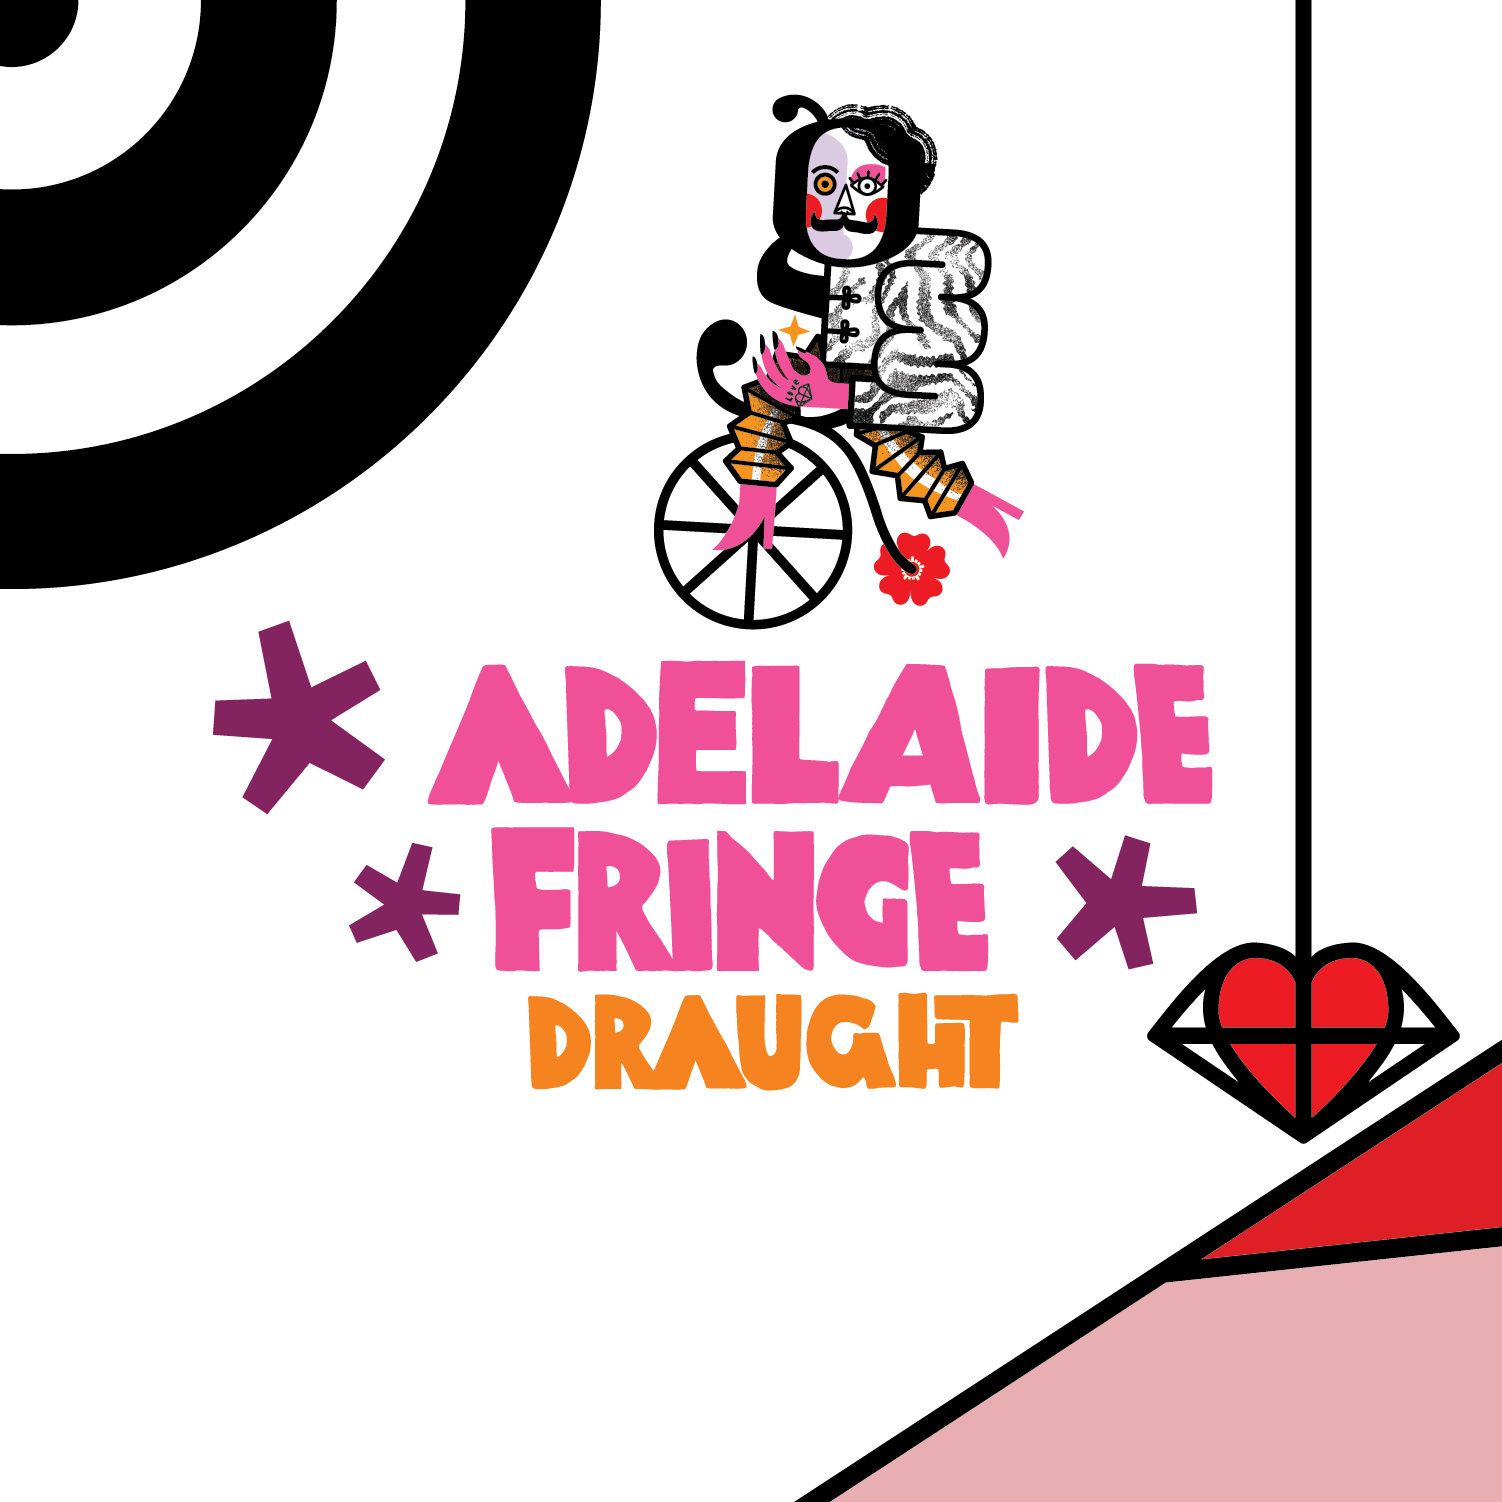 Adelaide Fringe Beer Little-02-01